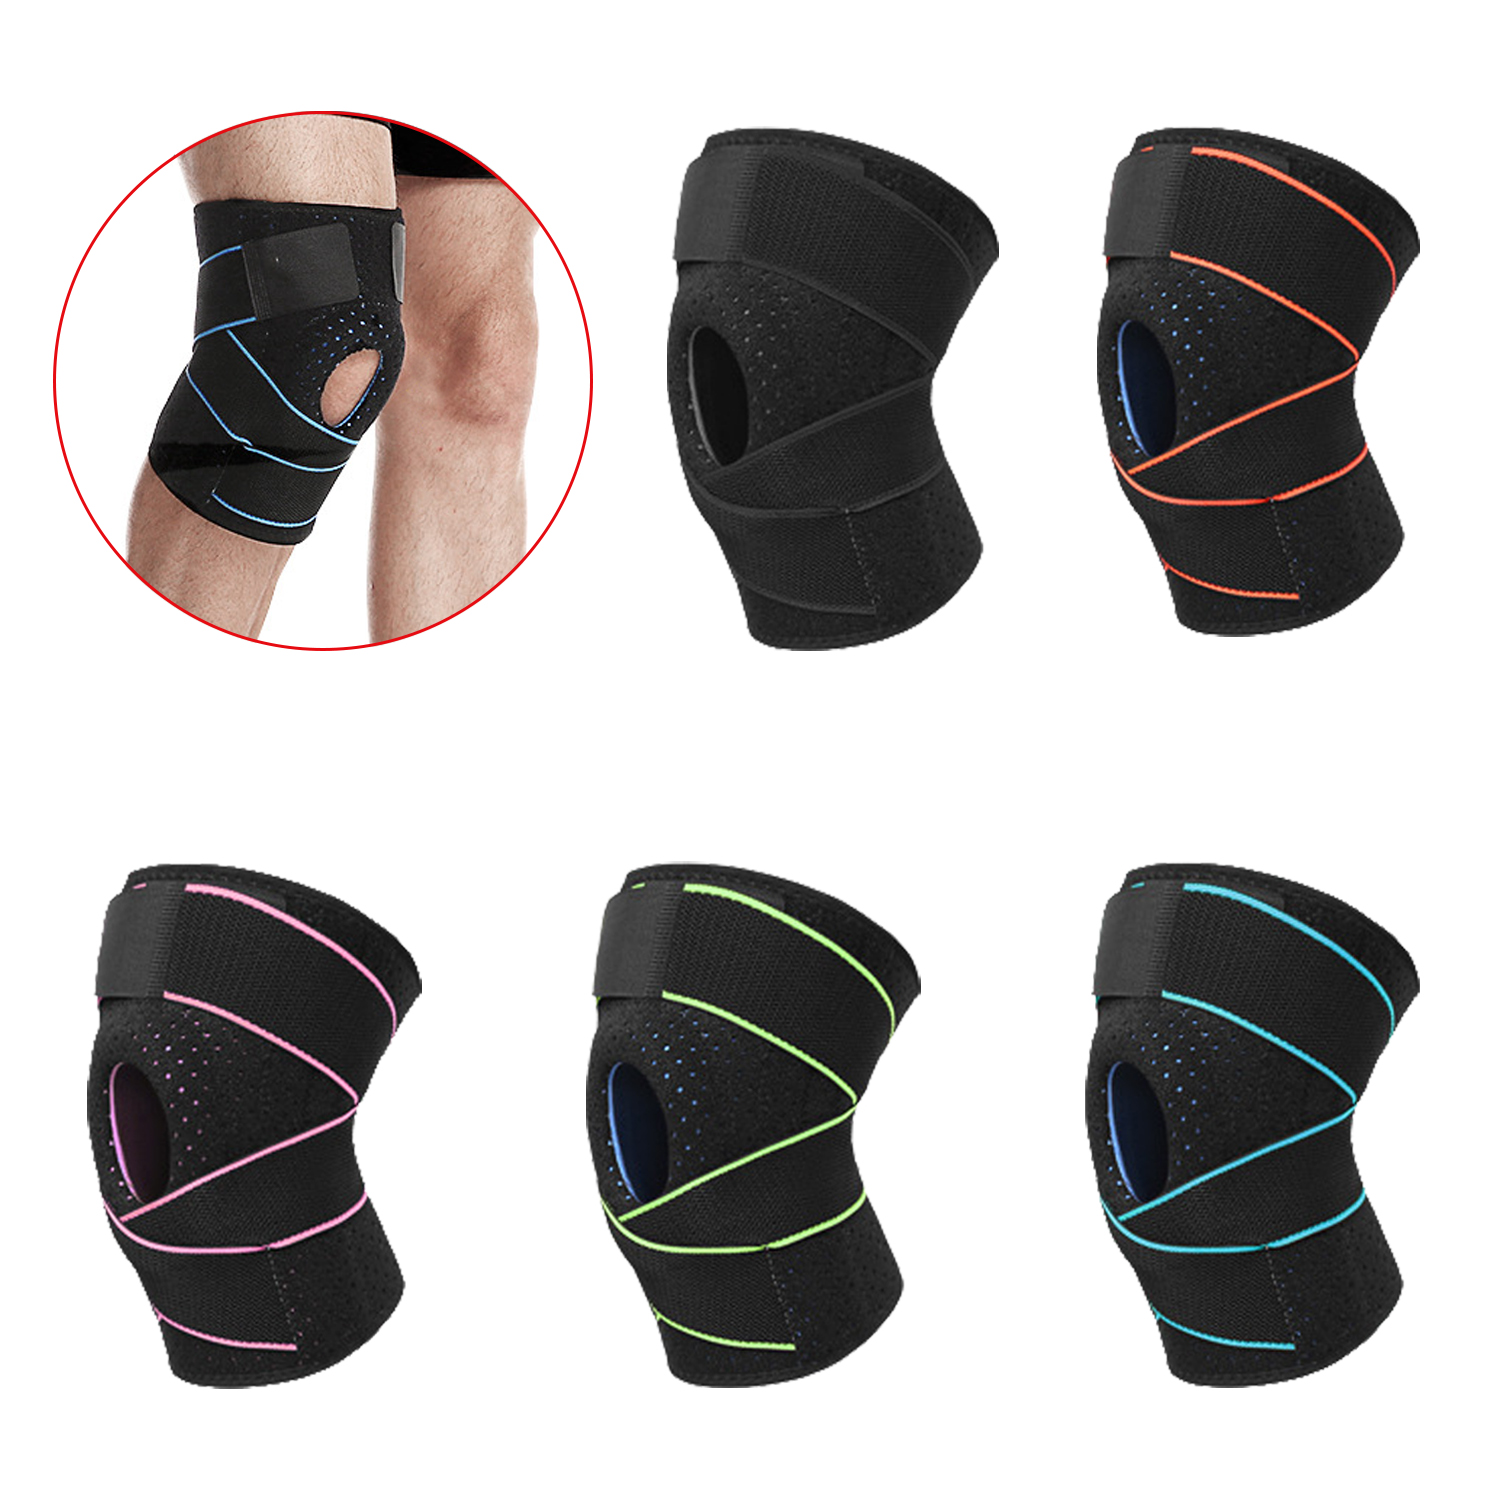 Fitness Knee Pads Protective Adjustable Knee Sleeve Compression Knee Brace Sport Support Knee Sleeve